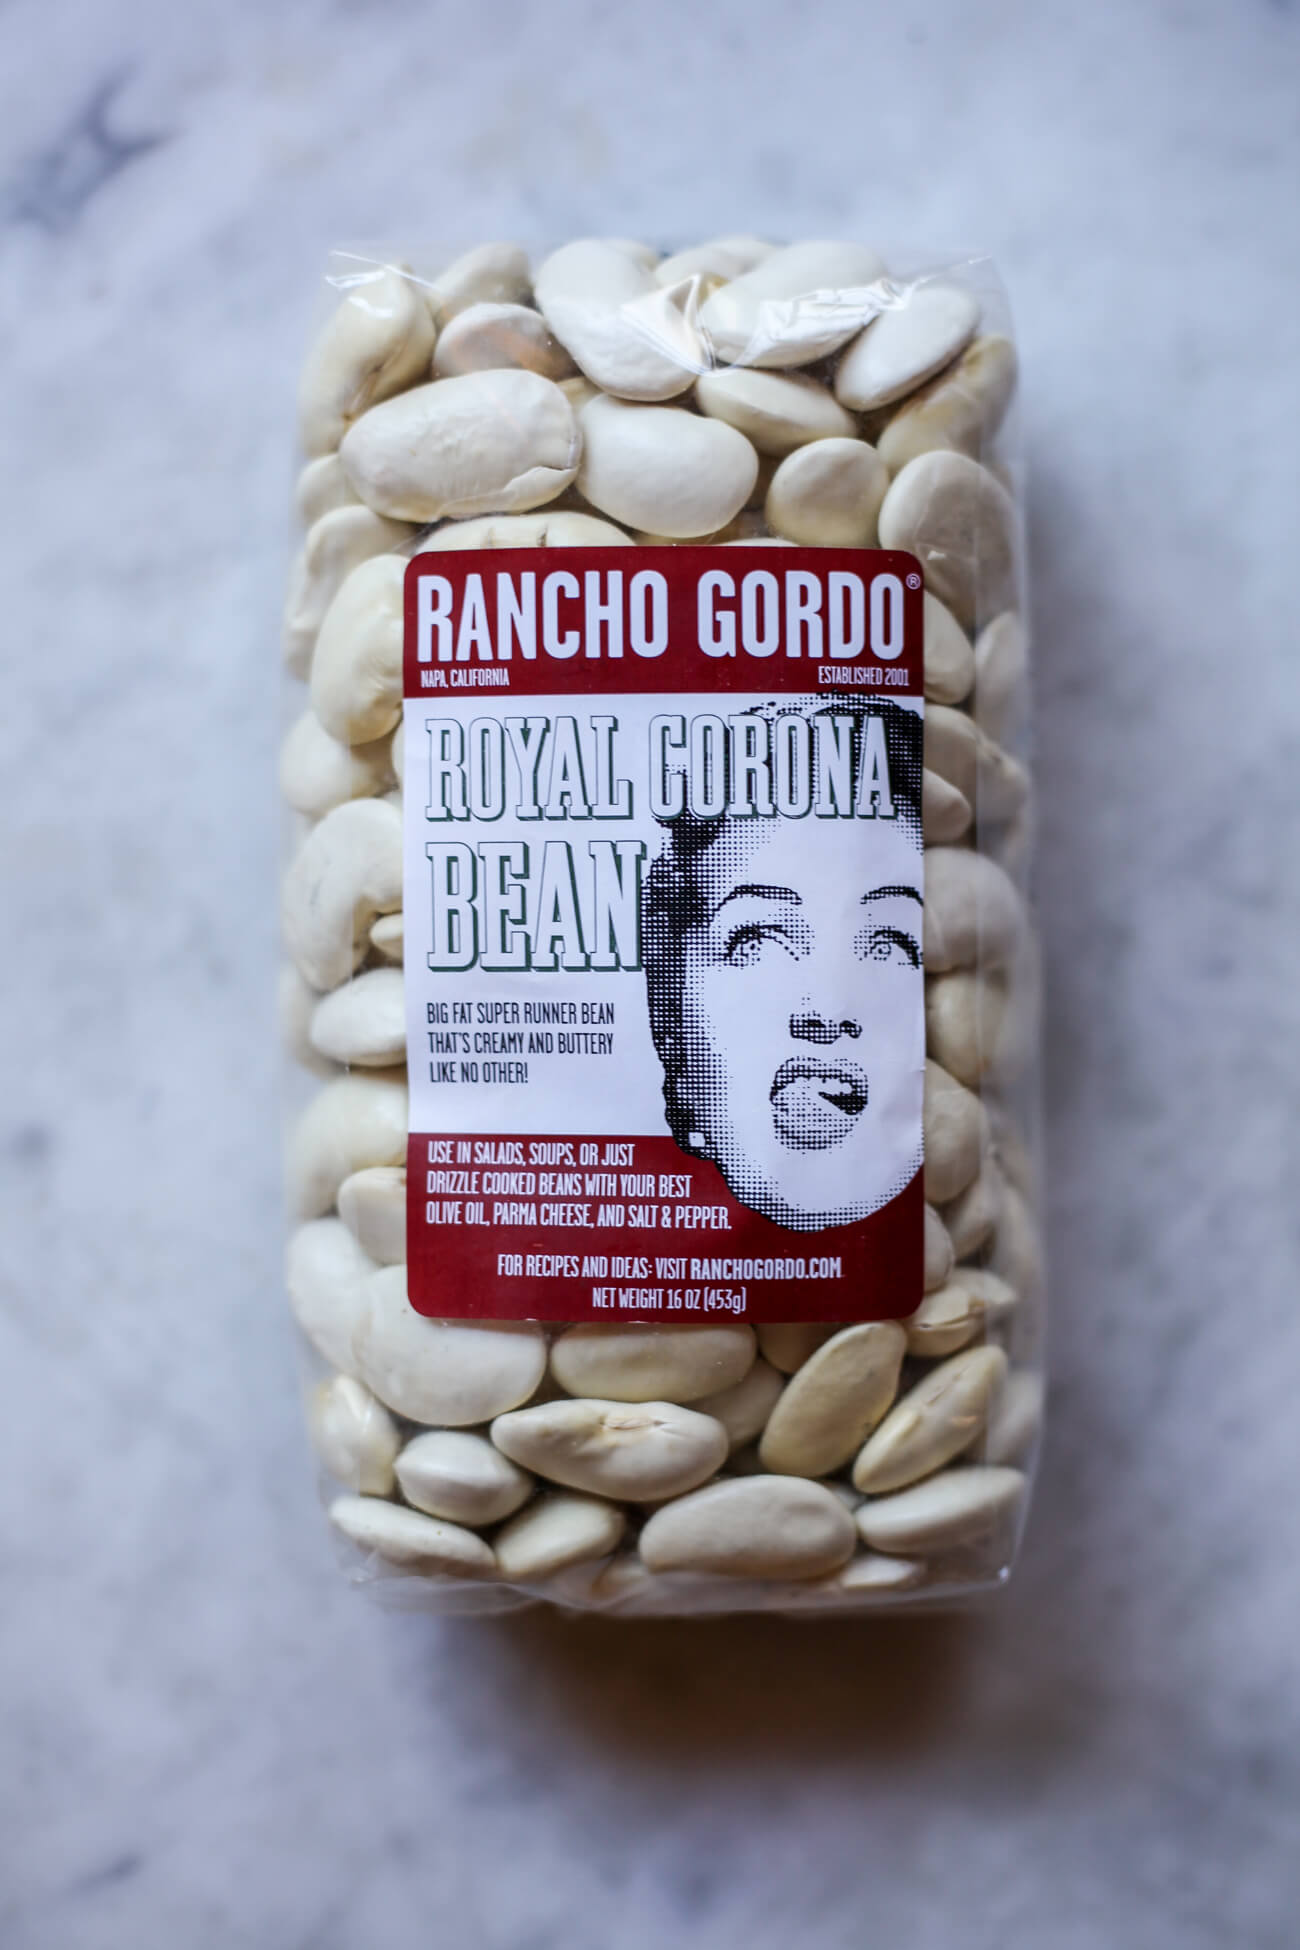 A 1-lb. package of Rancho Gordo giant beans, Royal Corona Bean, on a marble countertop. 